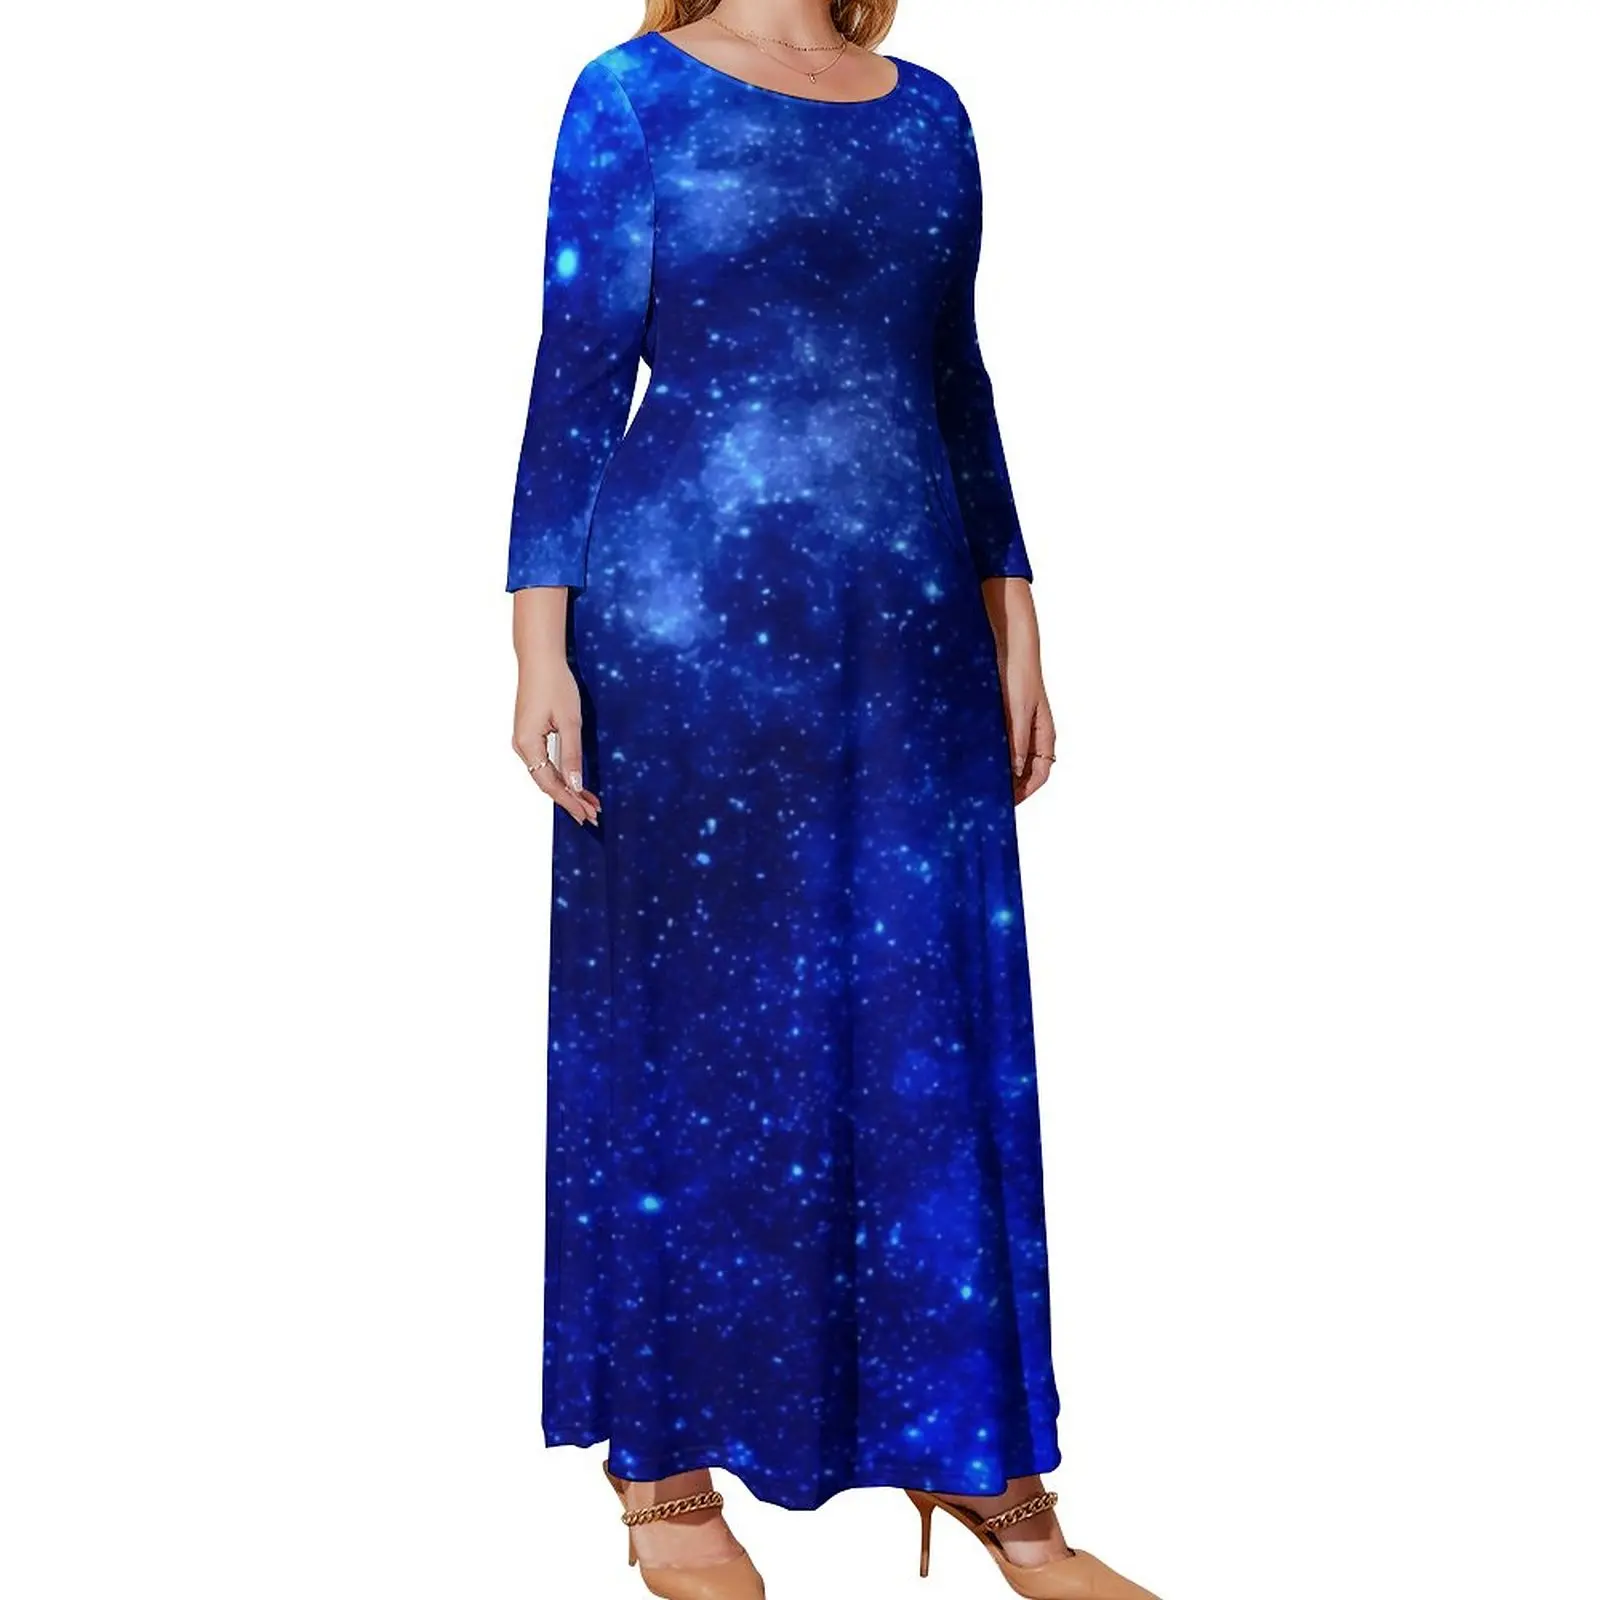 Blue Galaxy Sky Dress Woman Astronomy Print Elegant Maxi Dress Street Fashion Boho Beach Long Dresses Clothes Plus Size 3XL 4XL